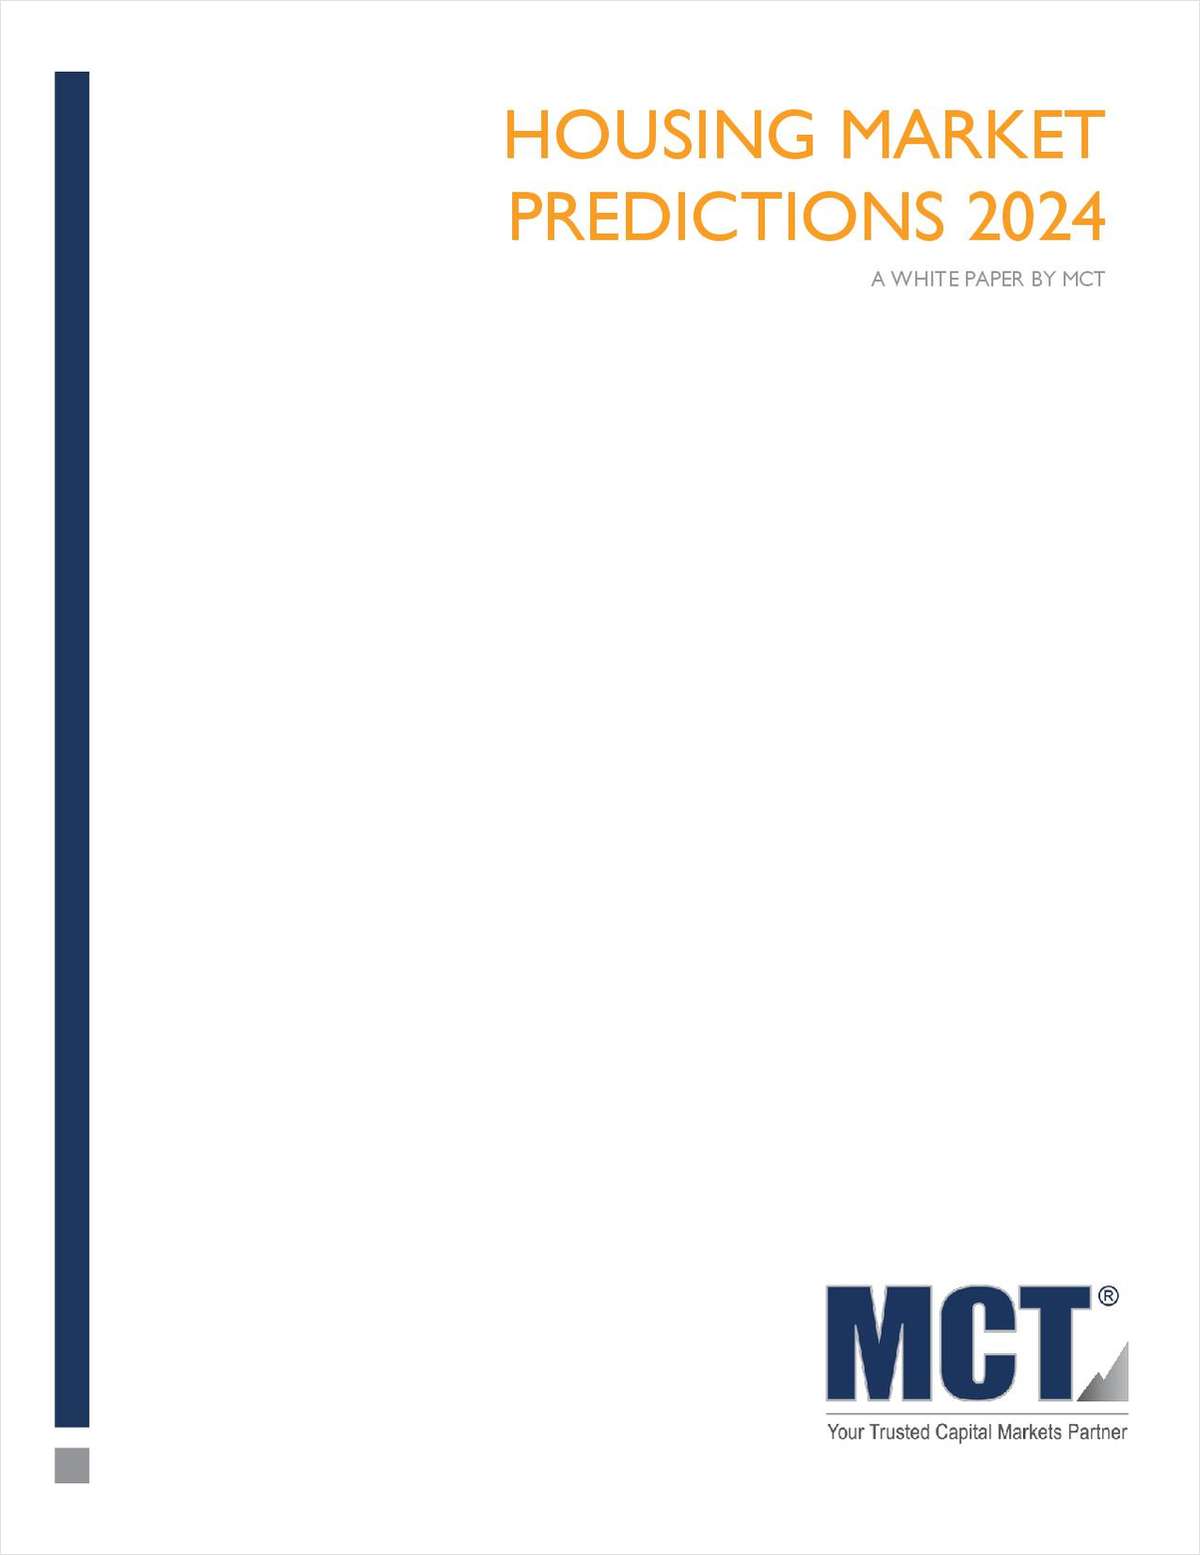 Housing Market Predictions 2024 link